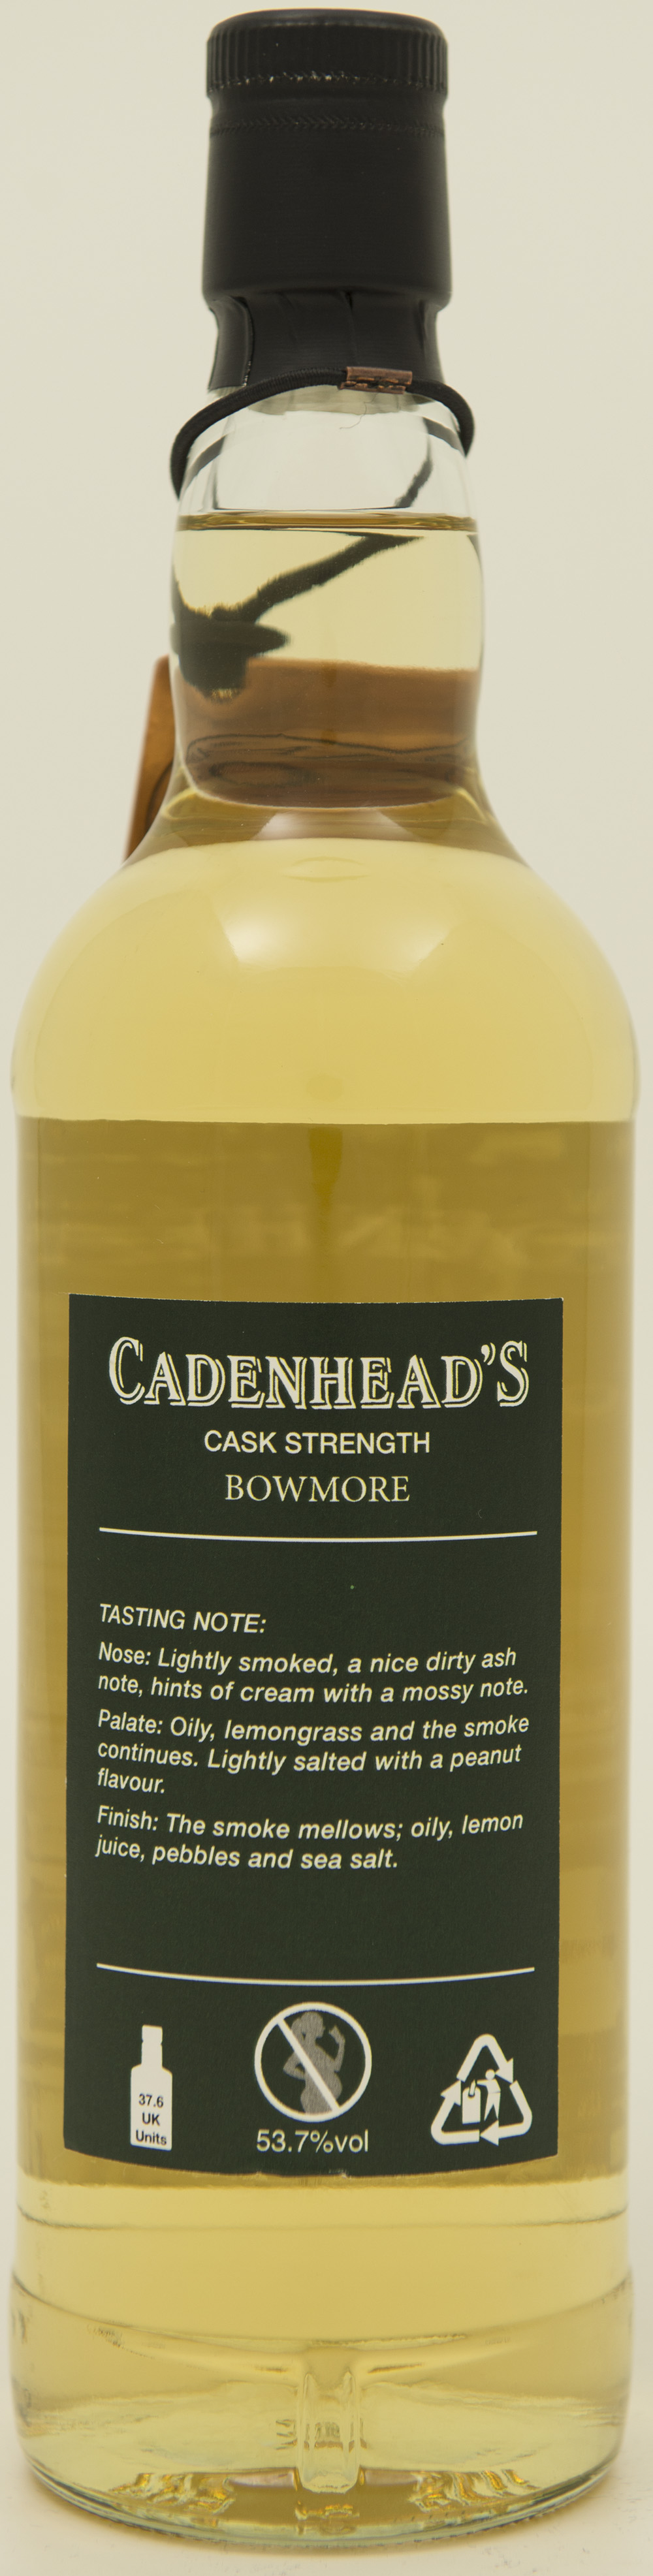 Billede: DSC_3744 - Cadenhead's Authentic Collection Bowmore 14 - bottle back.jpg